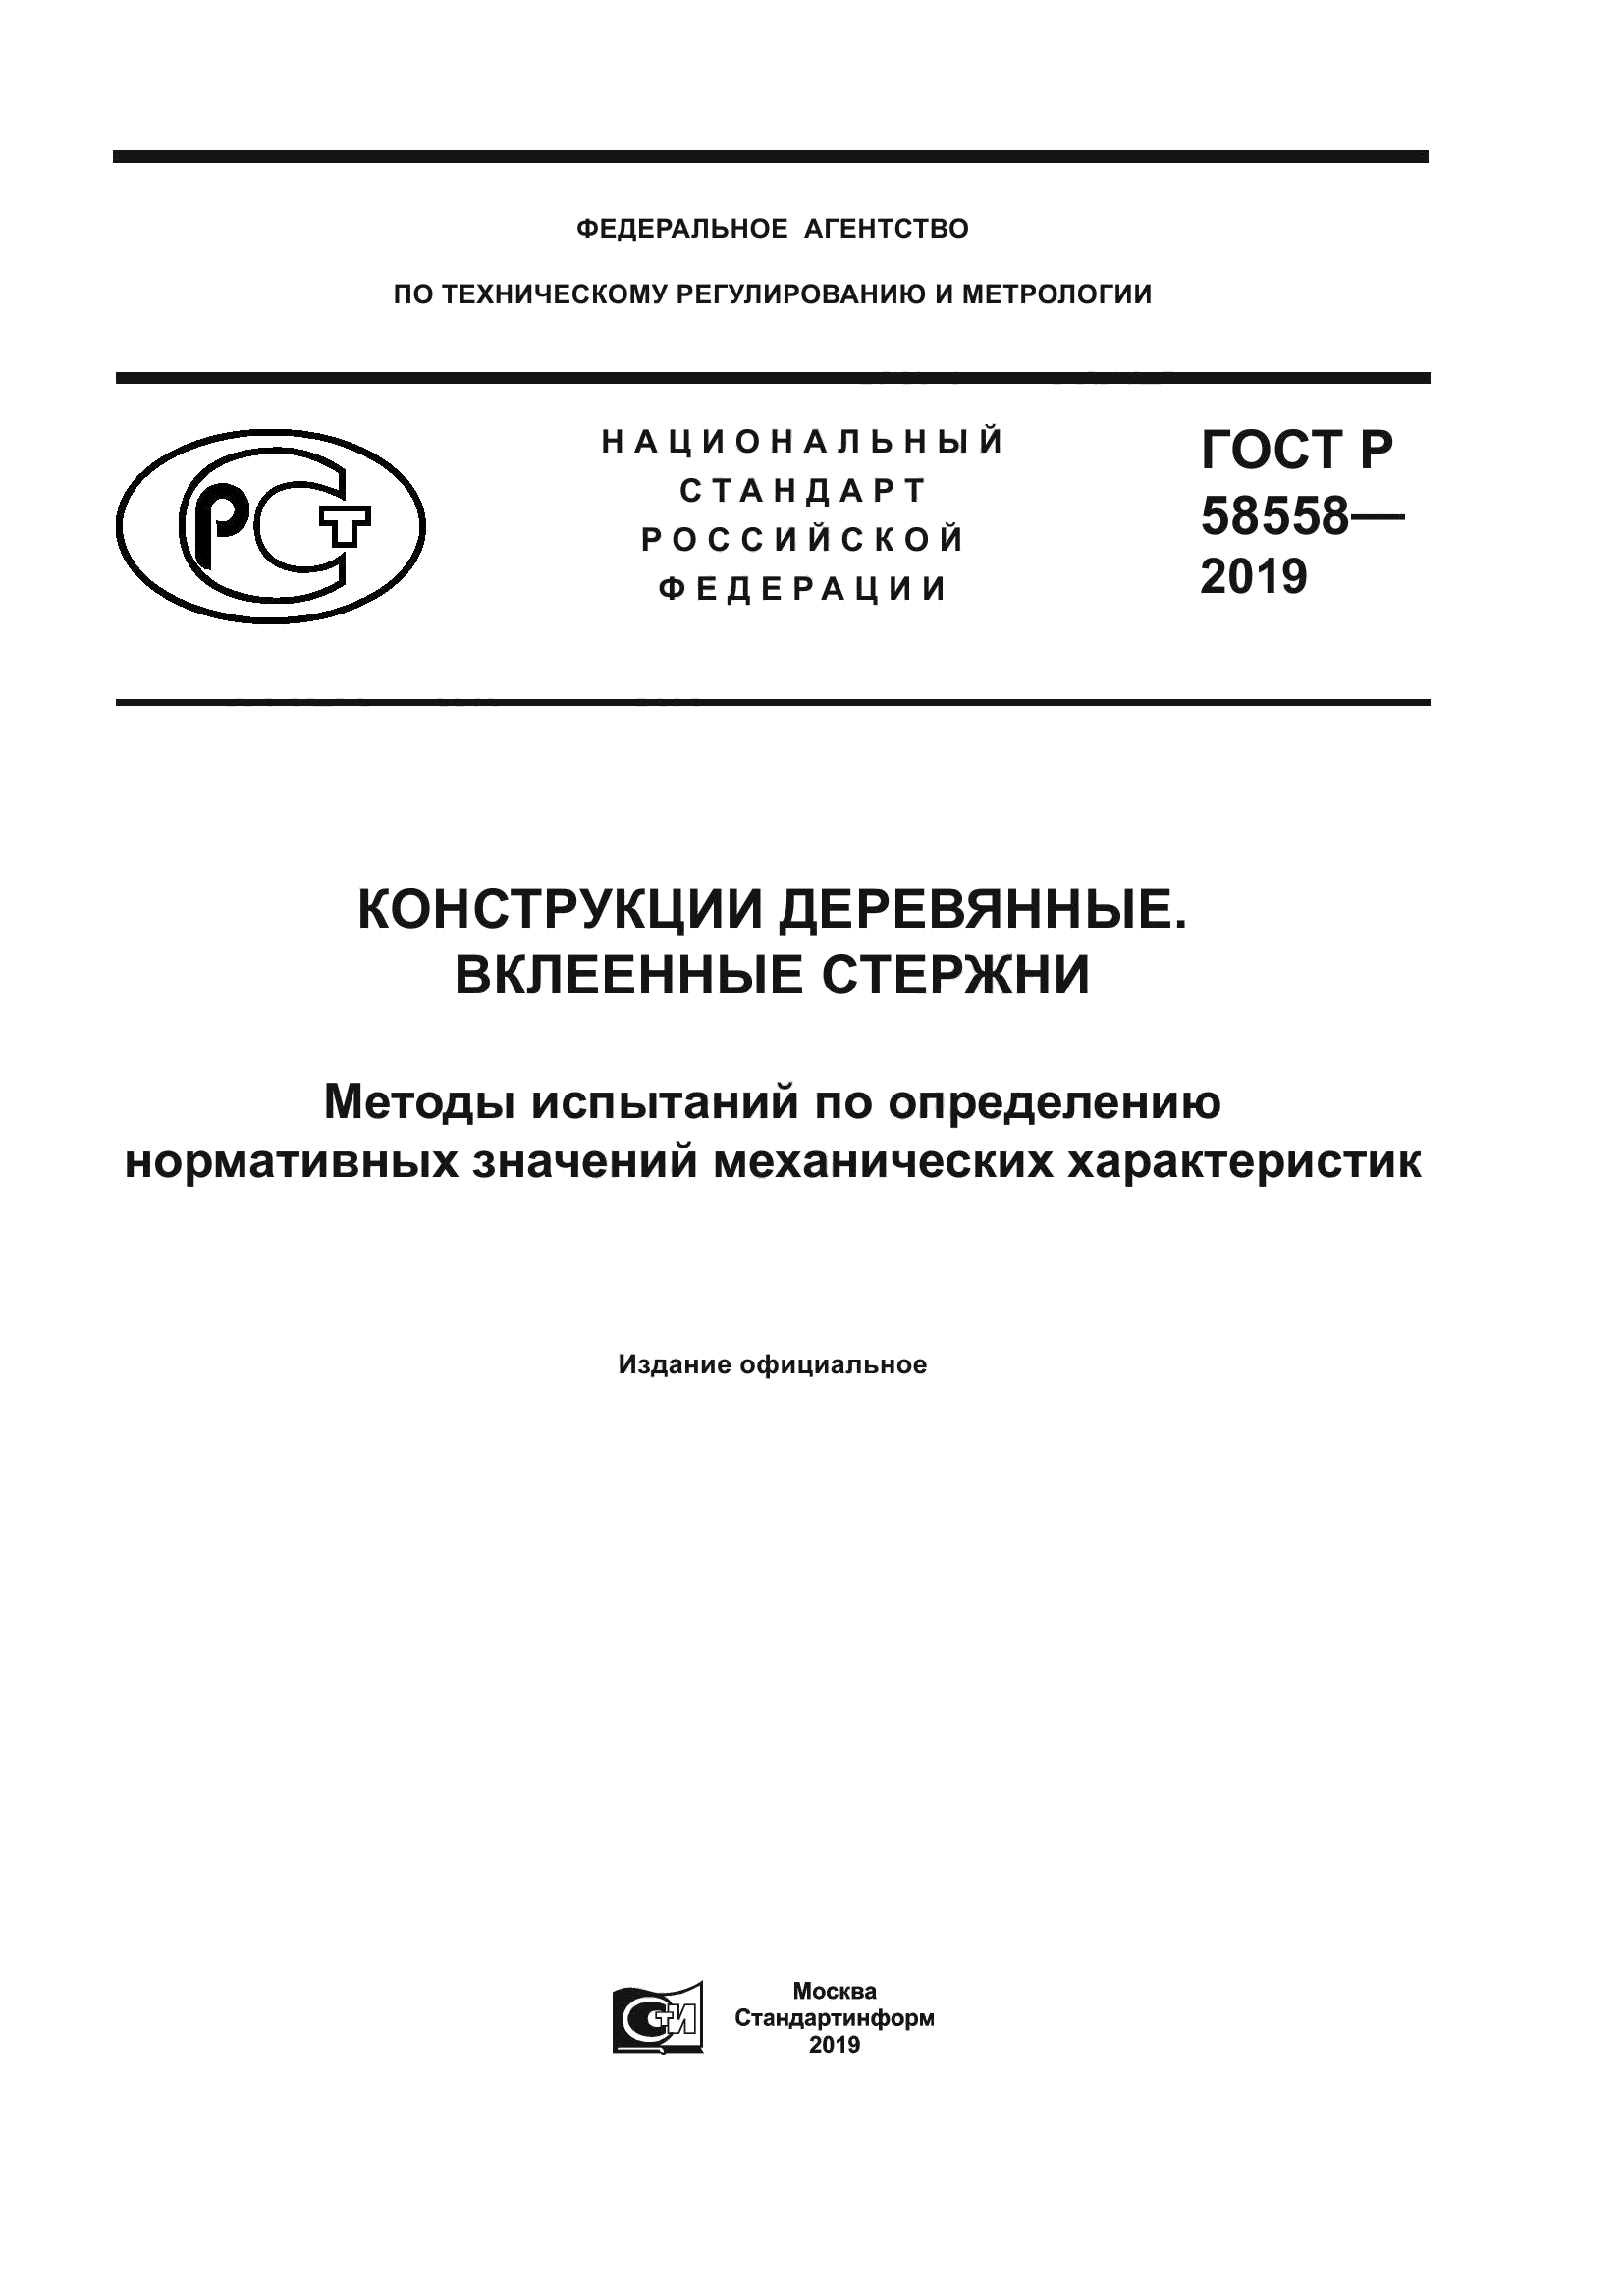 ГОСТ Р 58558-2019